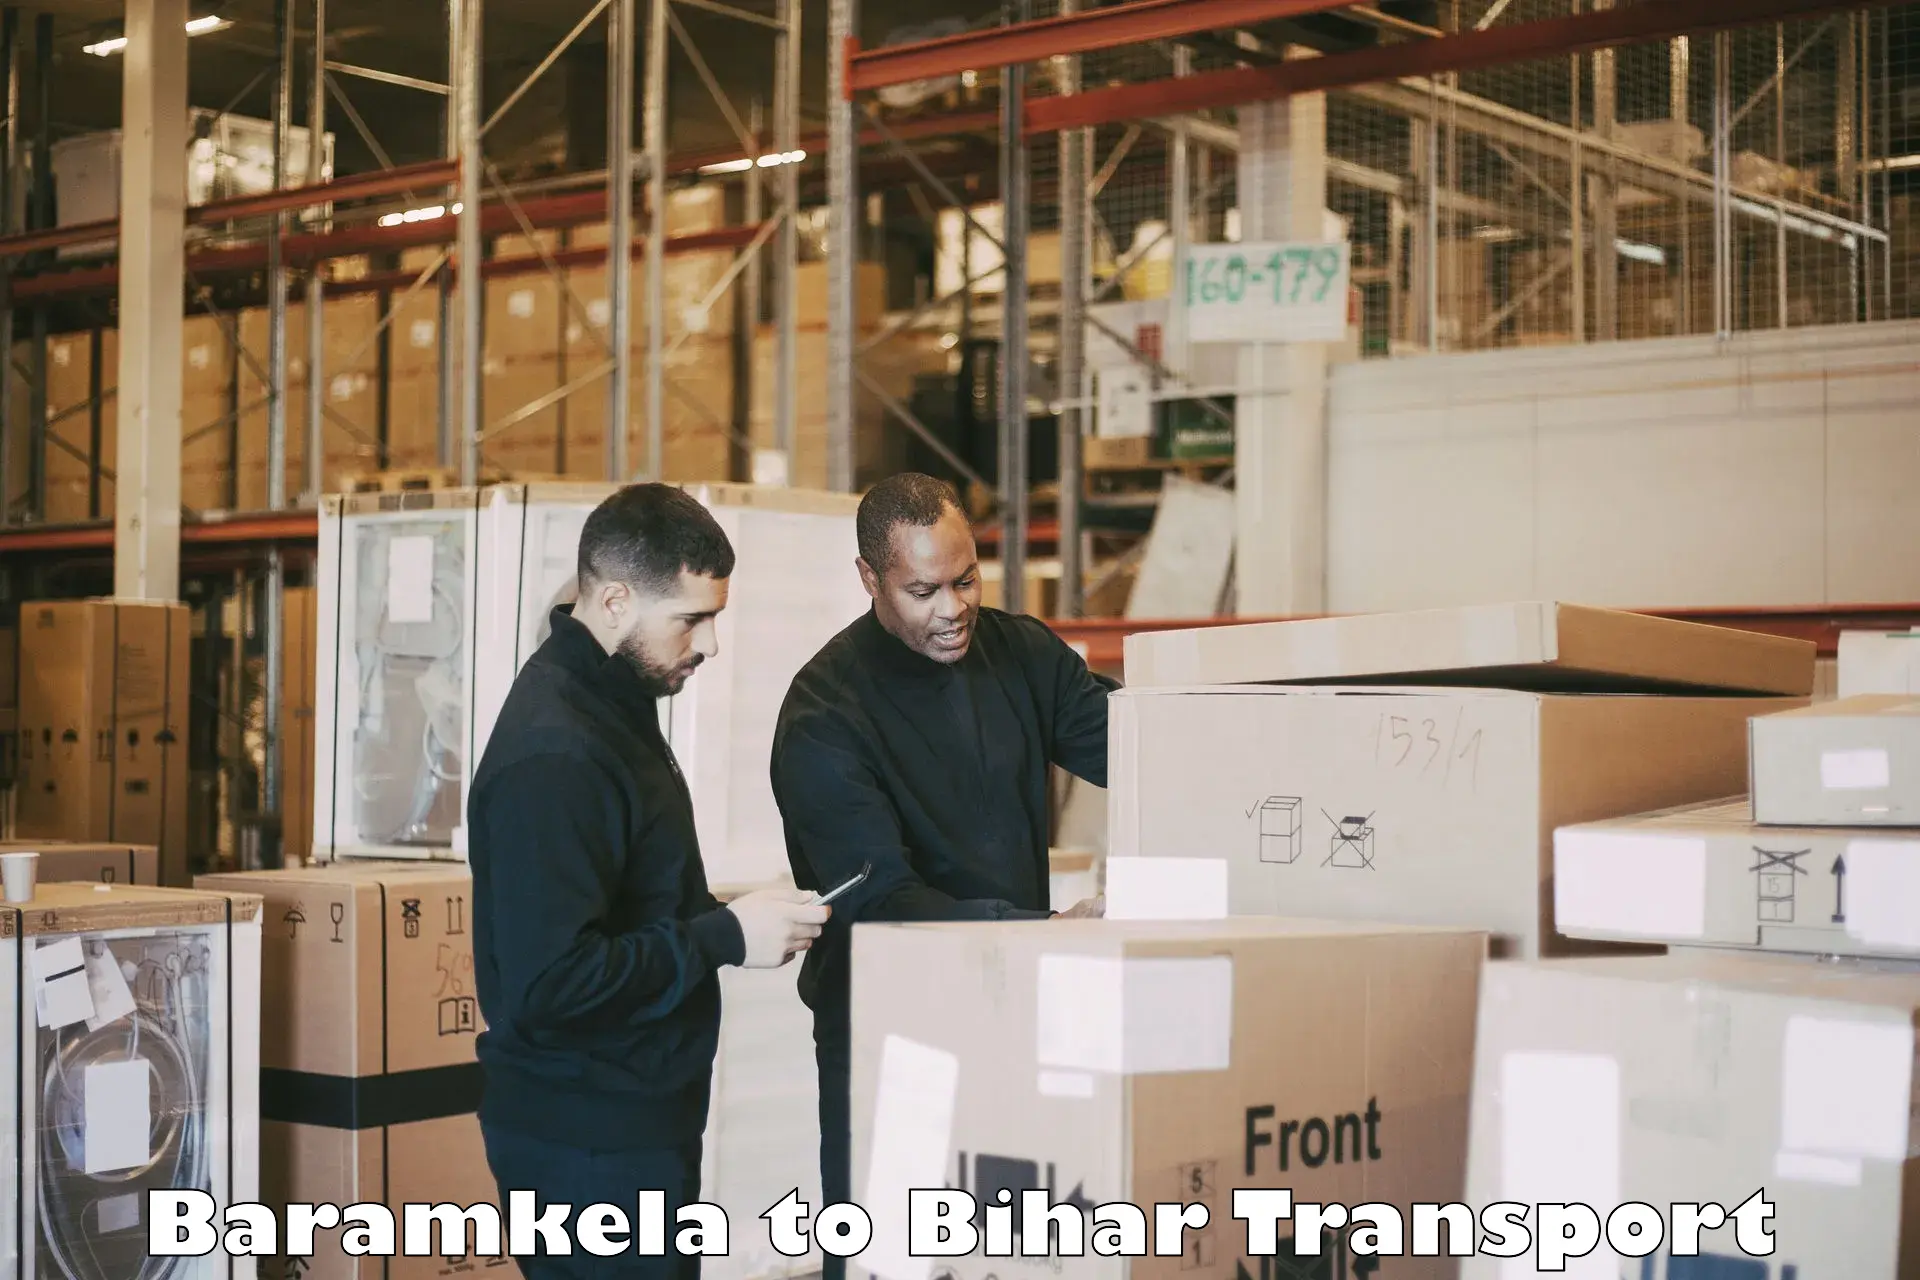 Pick up transport service in Baramkela to Tekari